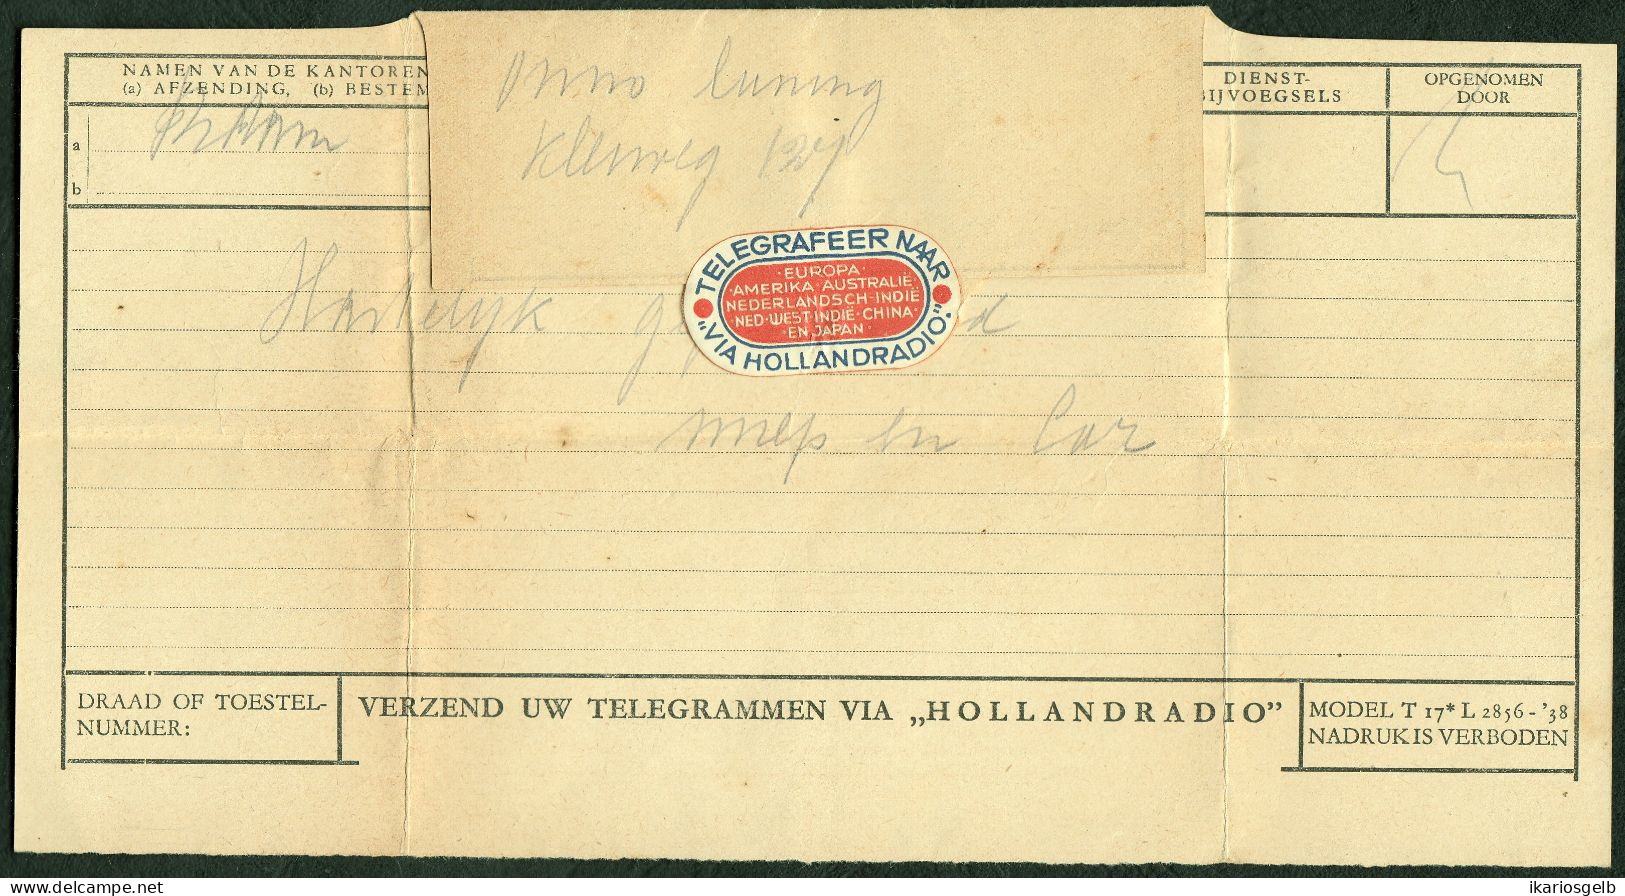 NEDERLAND 1933 Deco Telegramm Telegram + Private Telegraphenmarke "Via Hollandradio" Sluitzegel - Telegramzegels